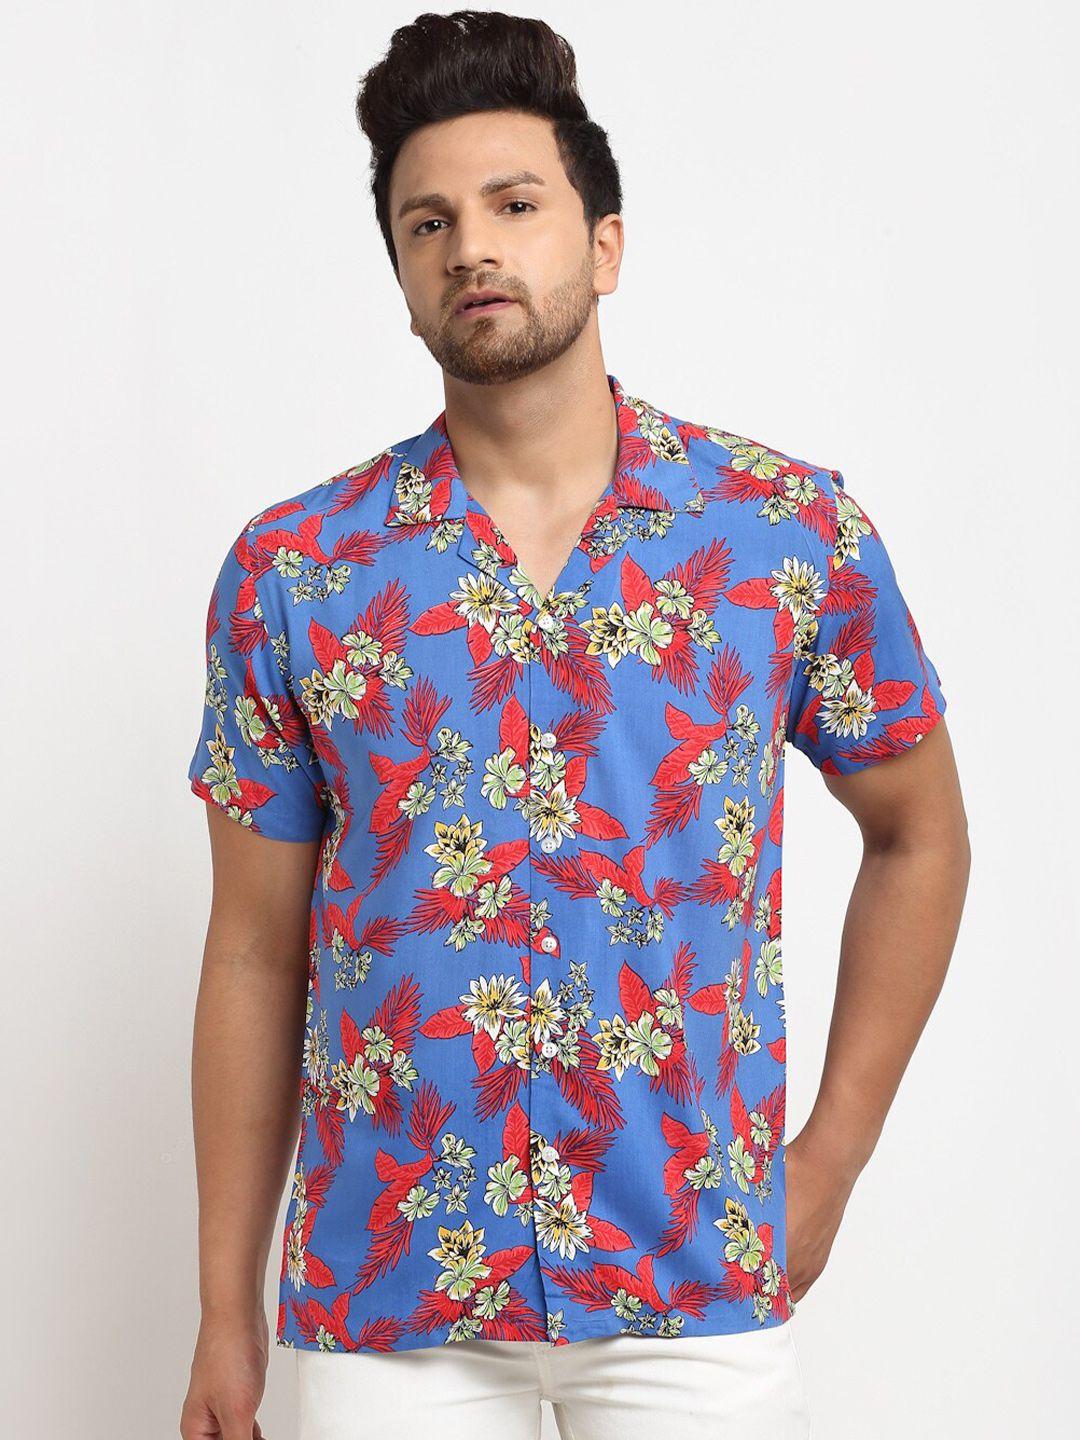 ennoble men classic floral printed casual shirt